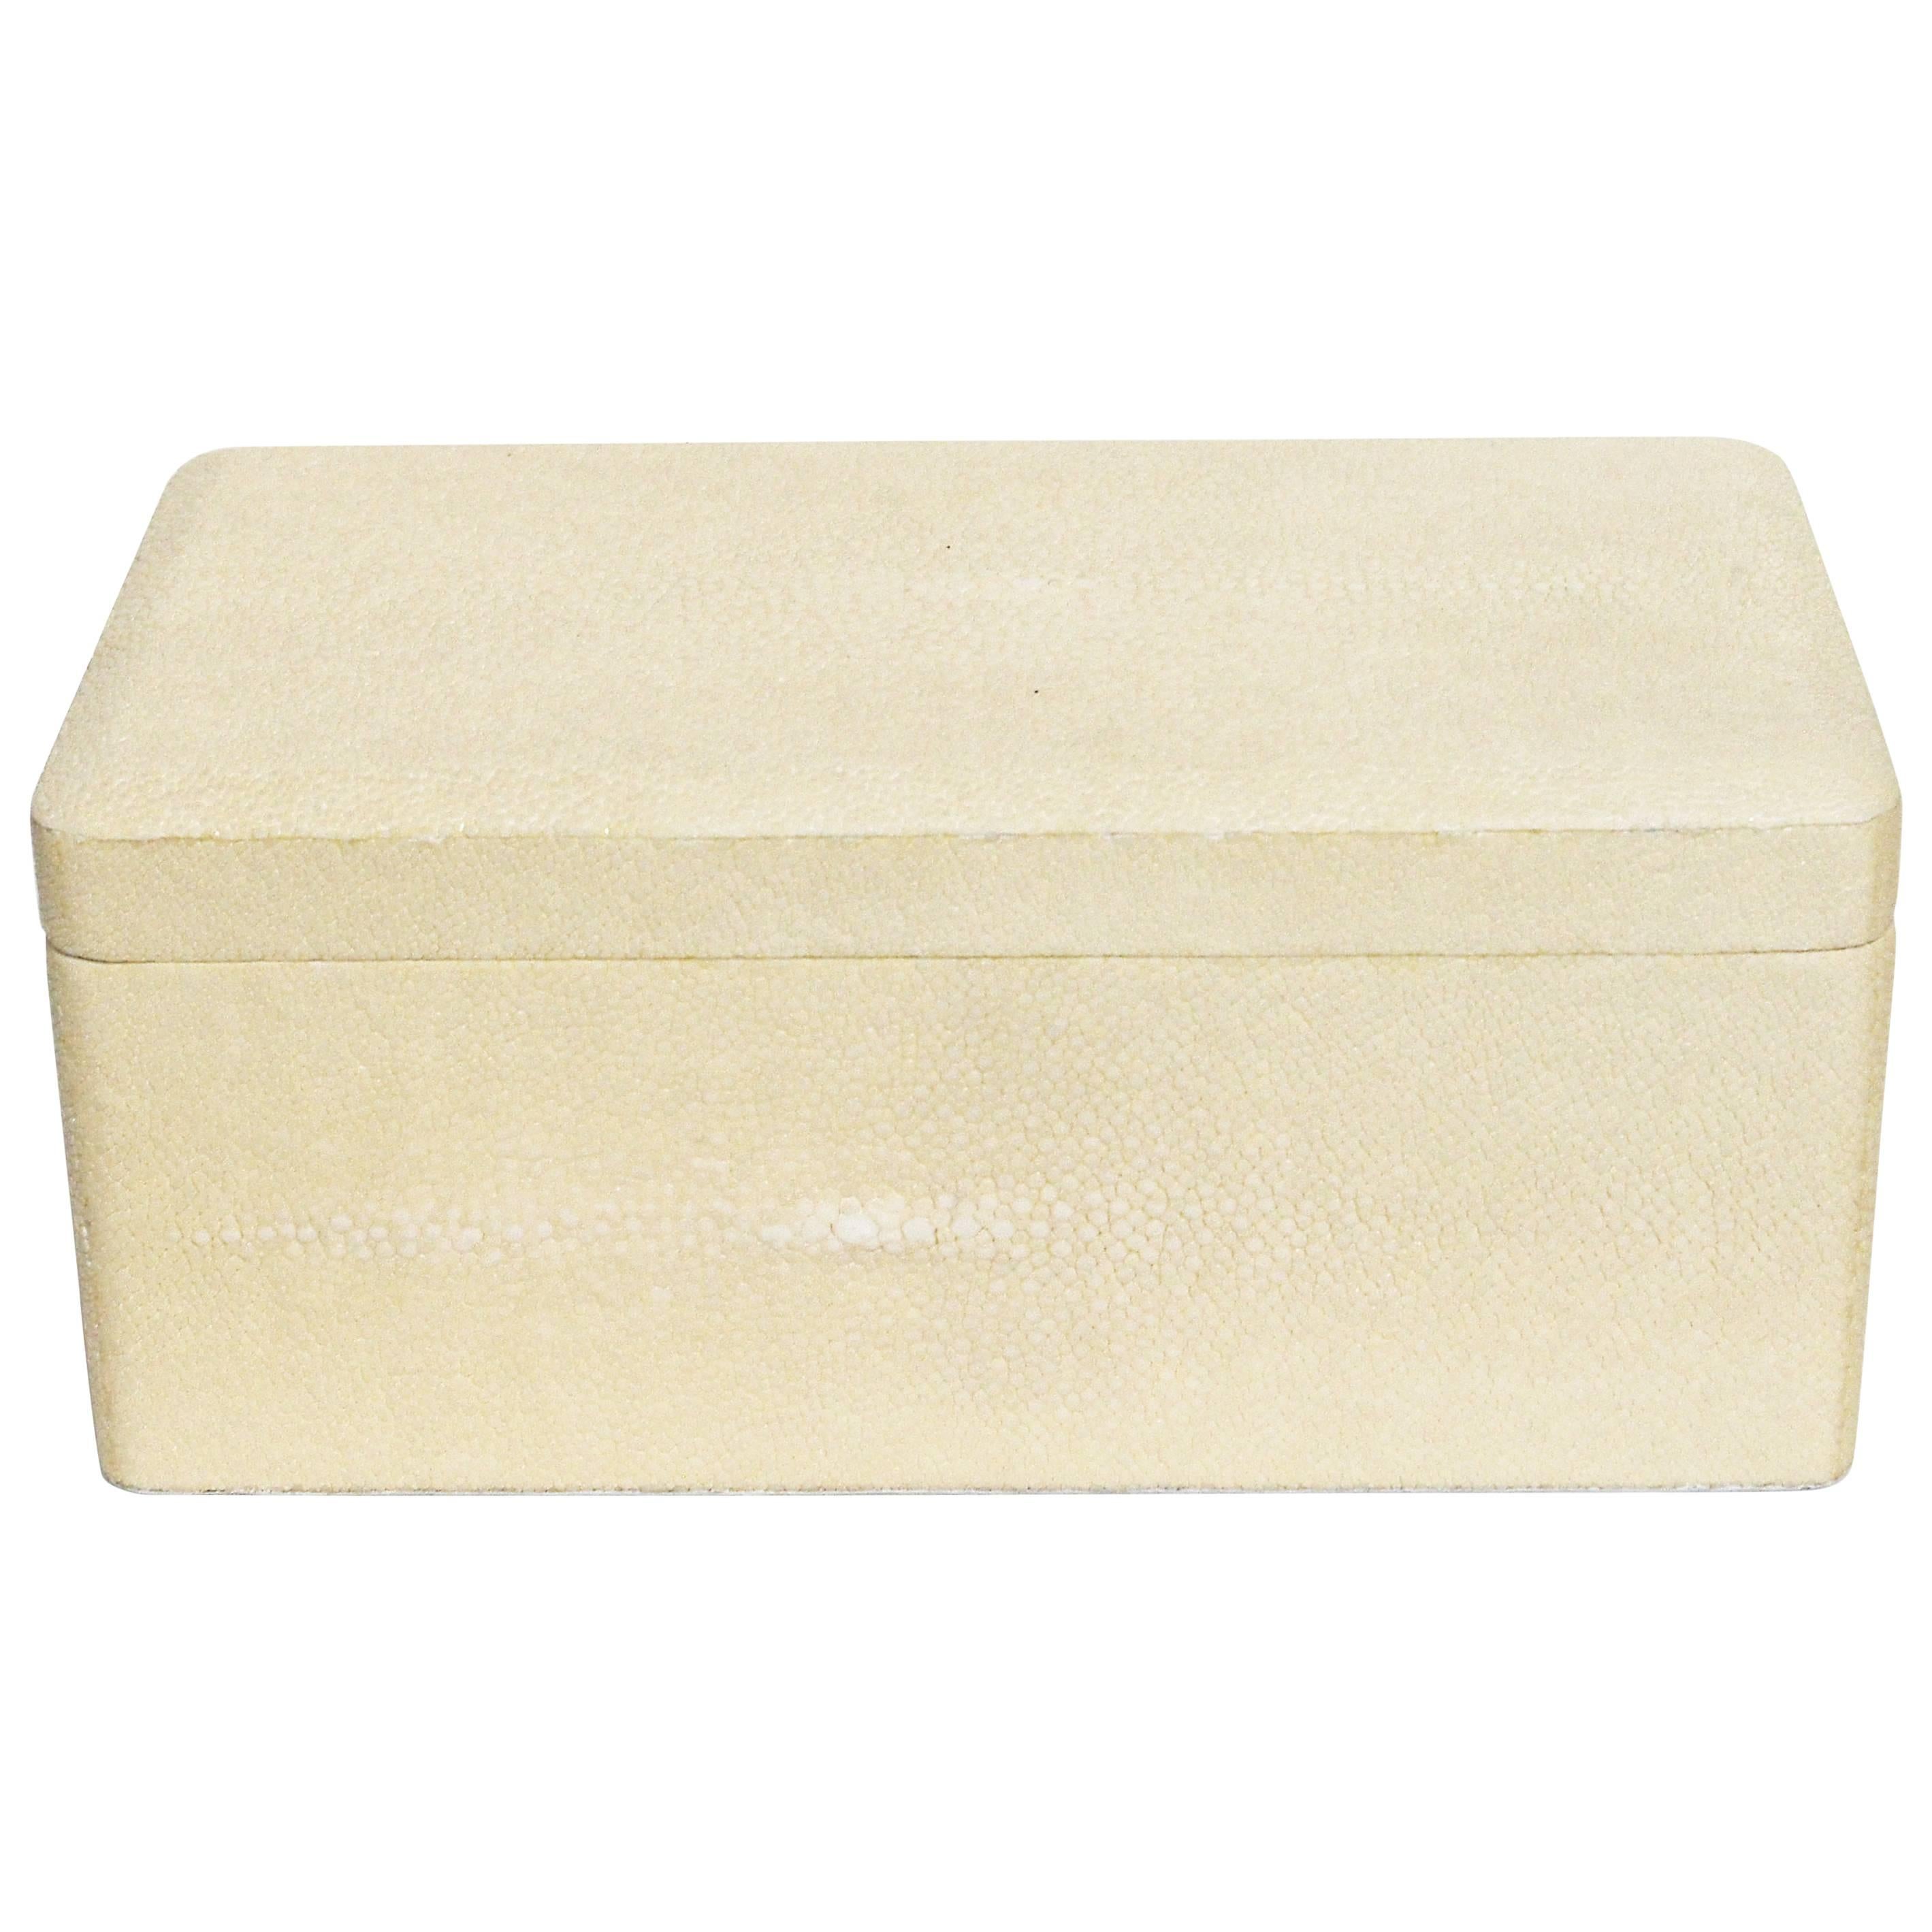 Ivory Shagreen Box by Fabio Ltd